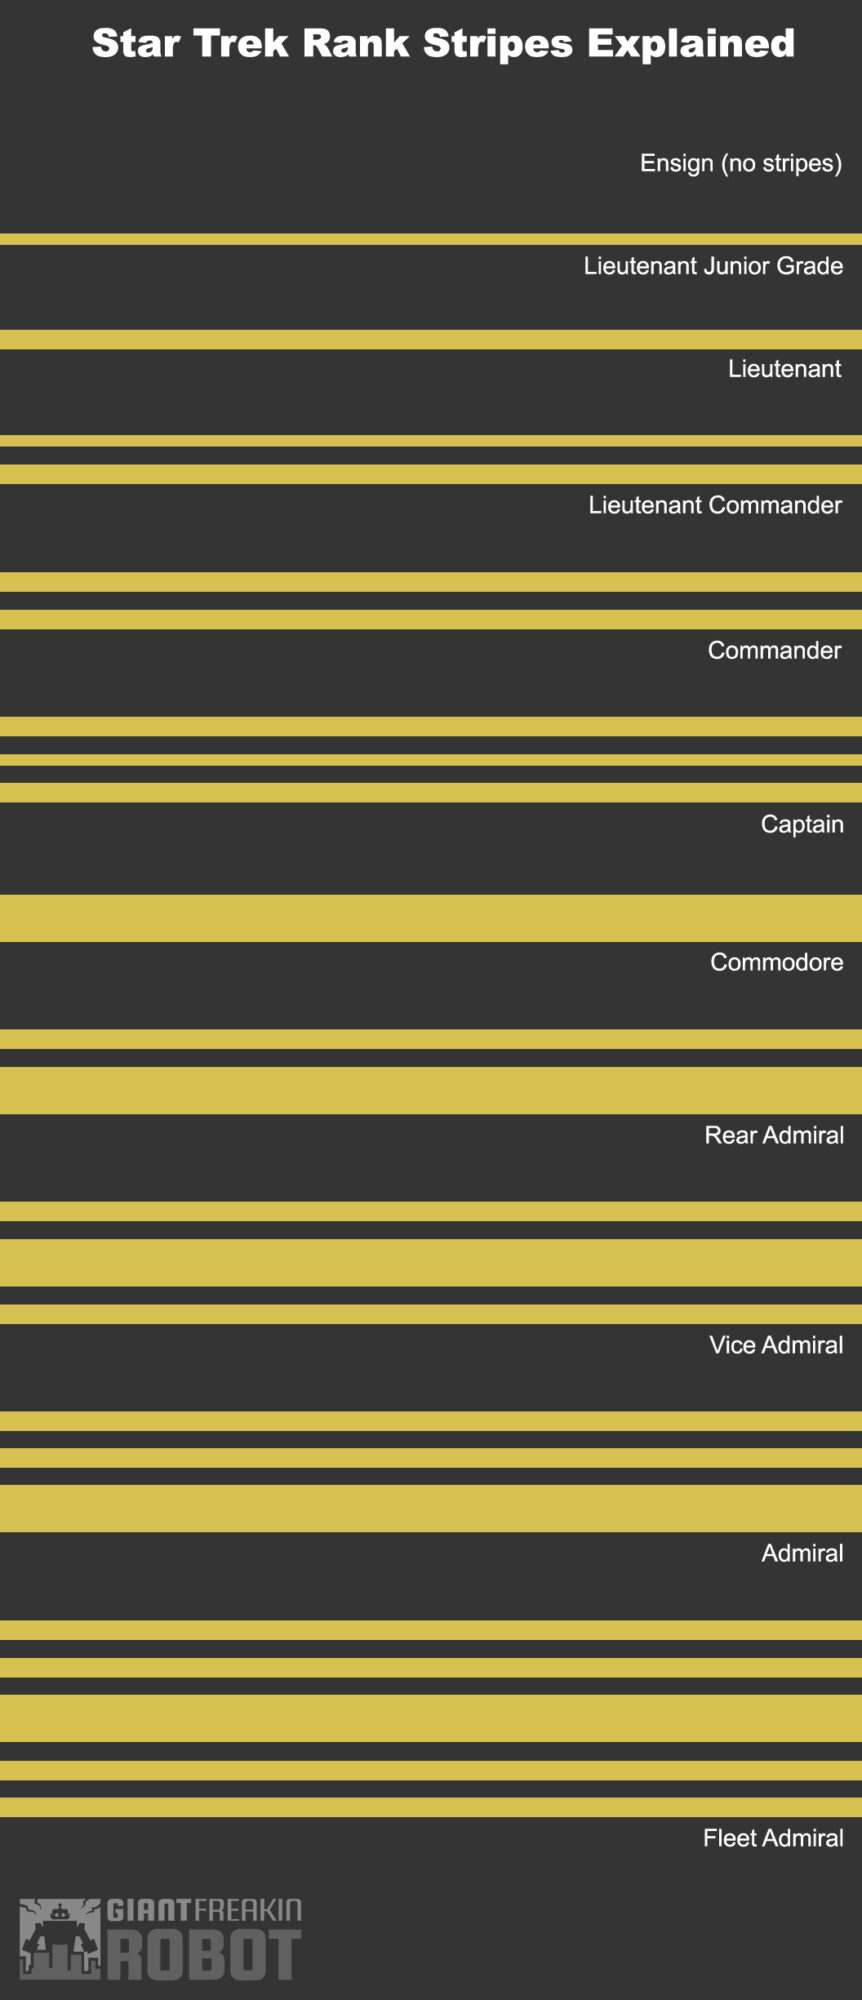 Star Trek Starfleet rank stripes explained